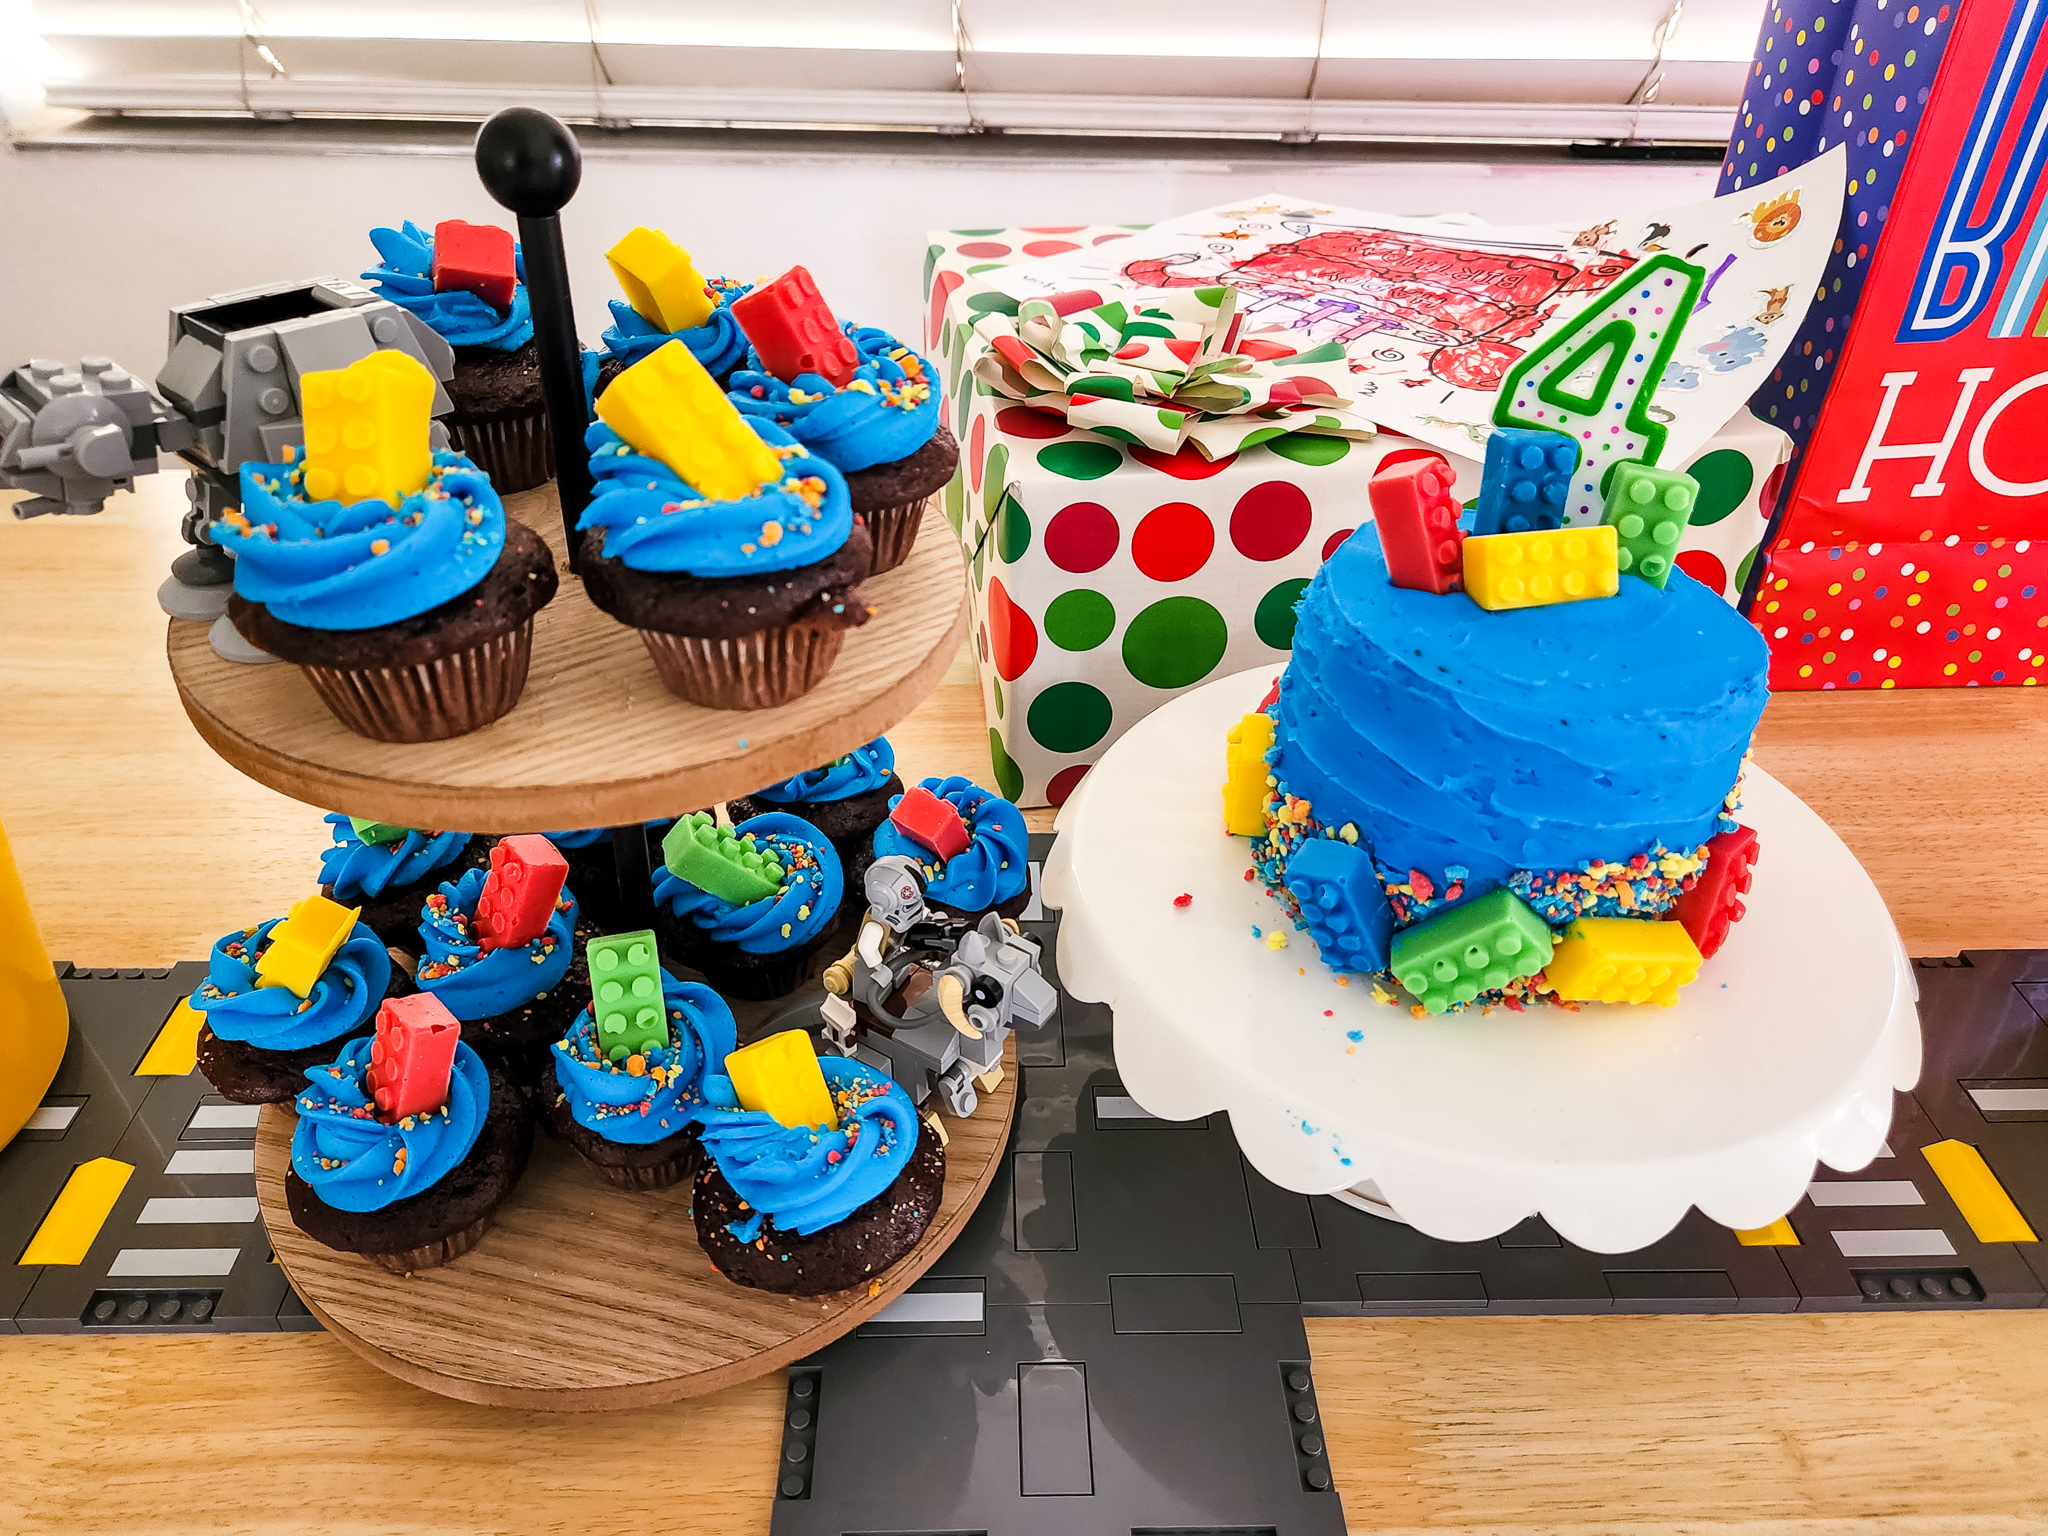 LEGO-themed birthday party